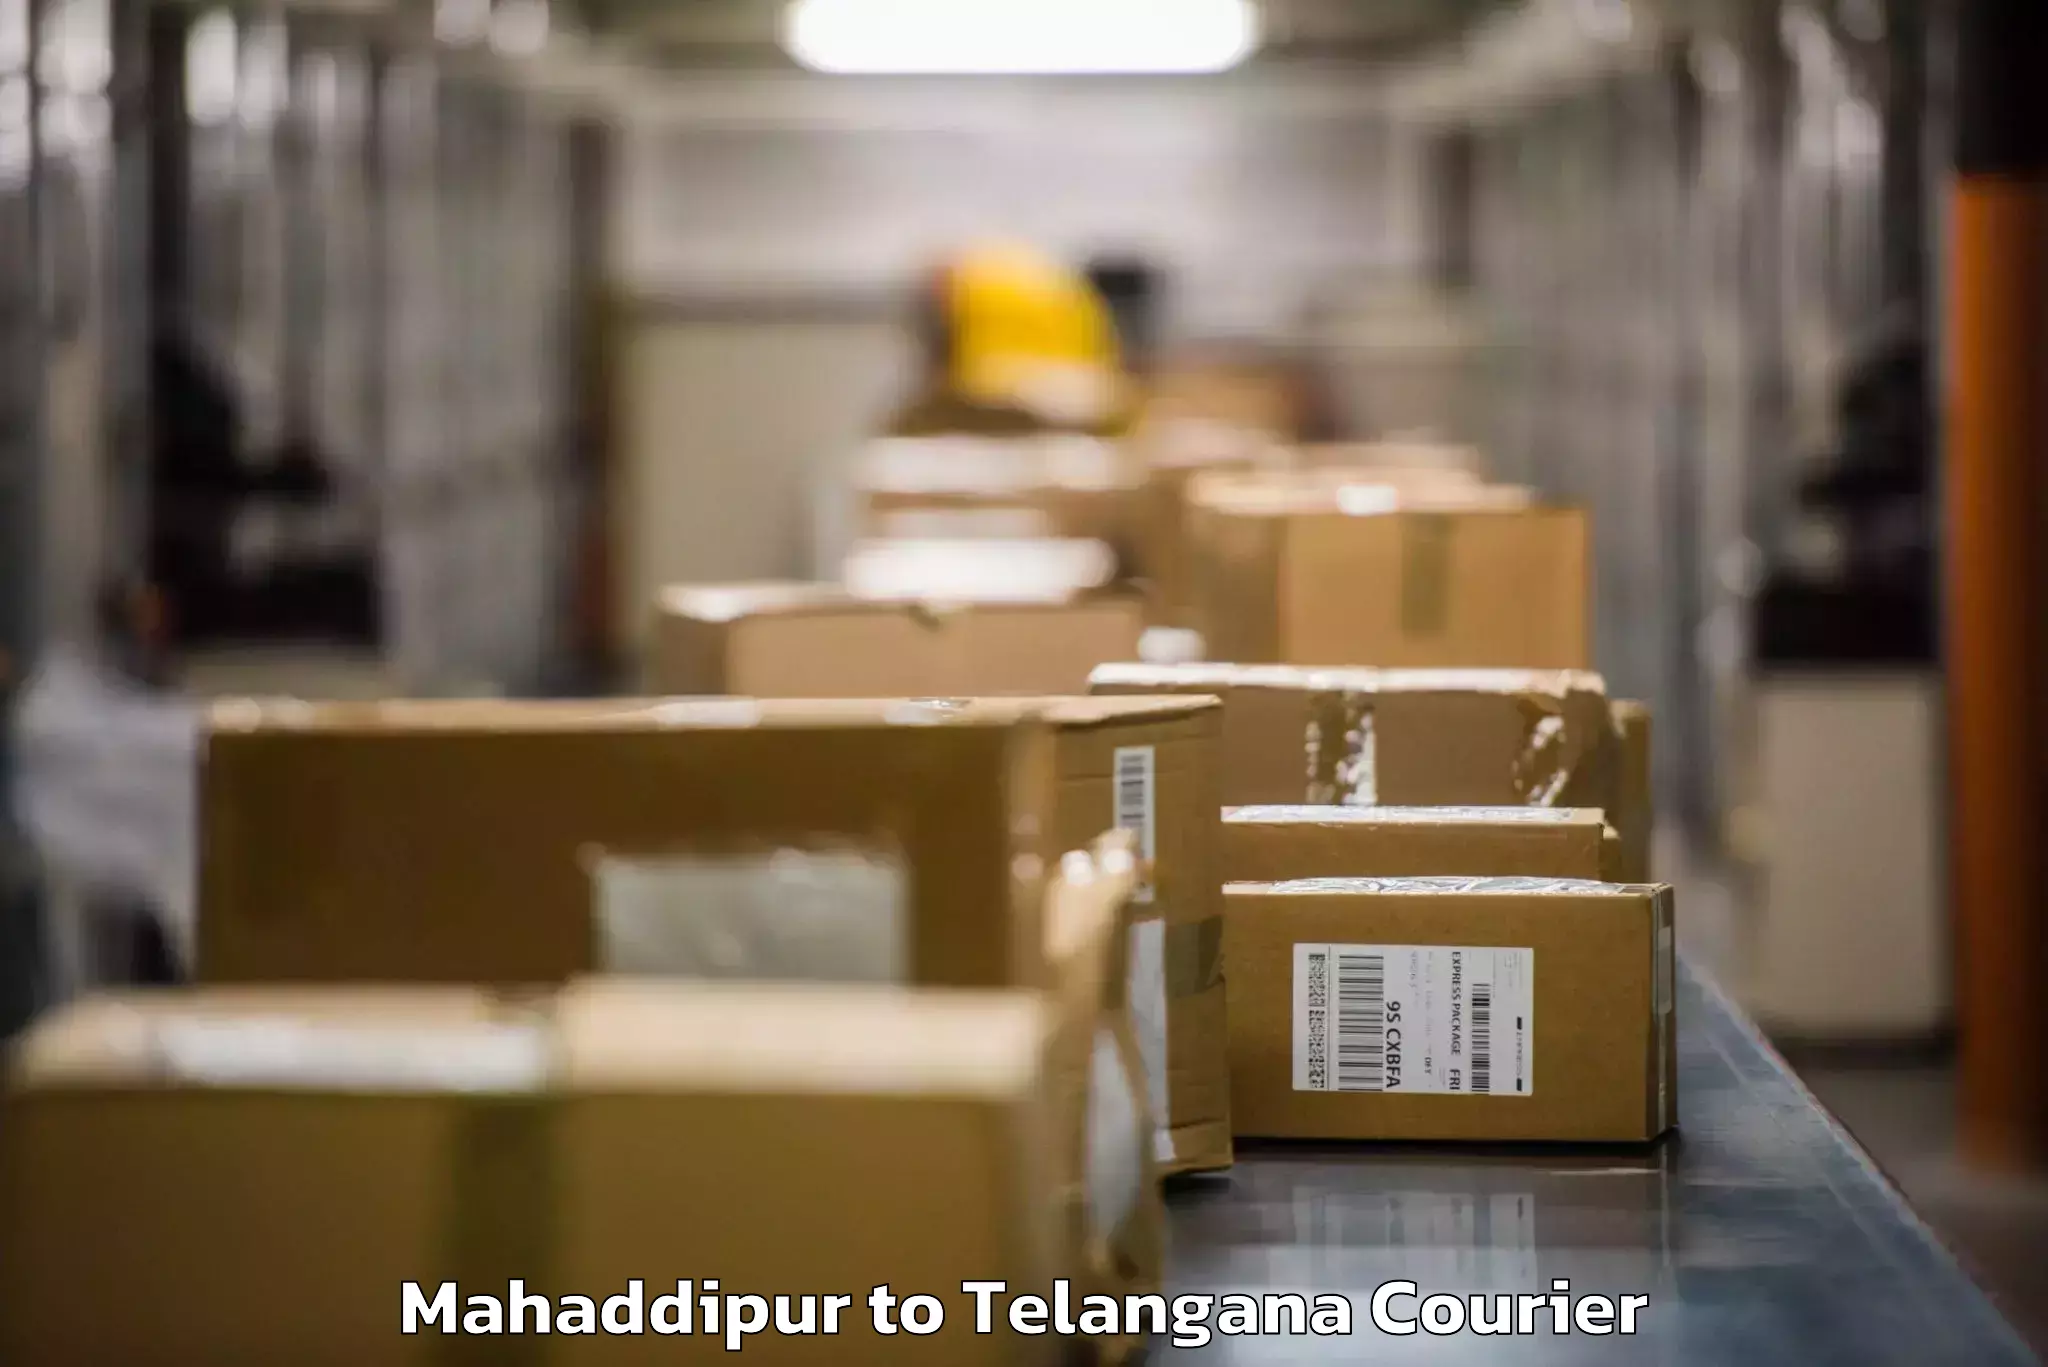 Baggage relocation service Mahaddipur to Gangadhara